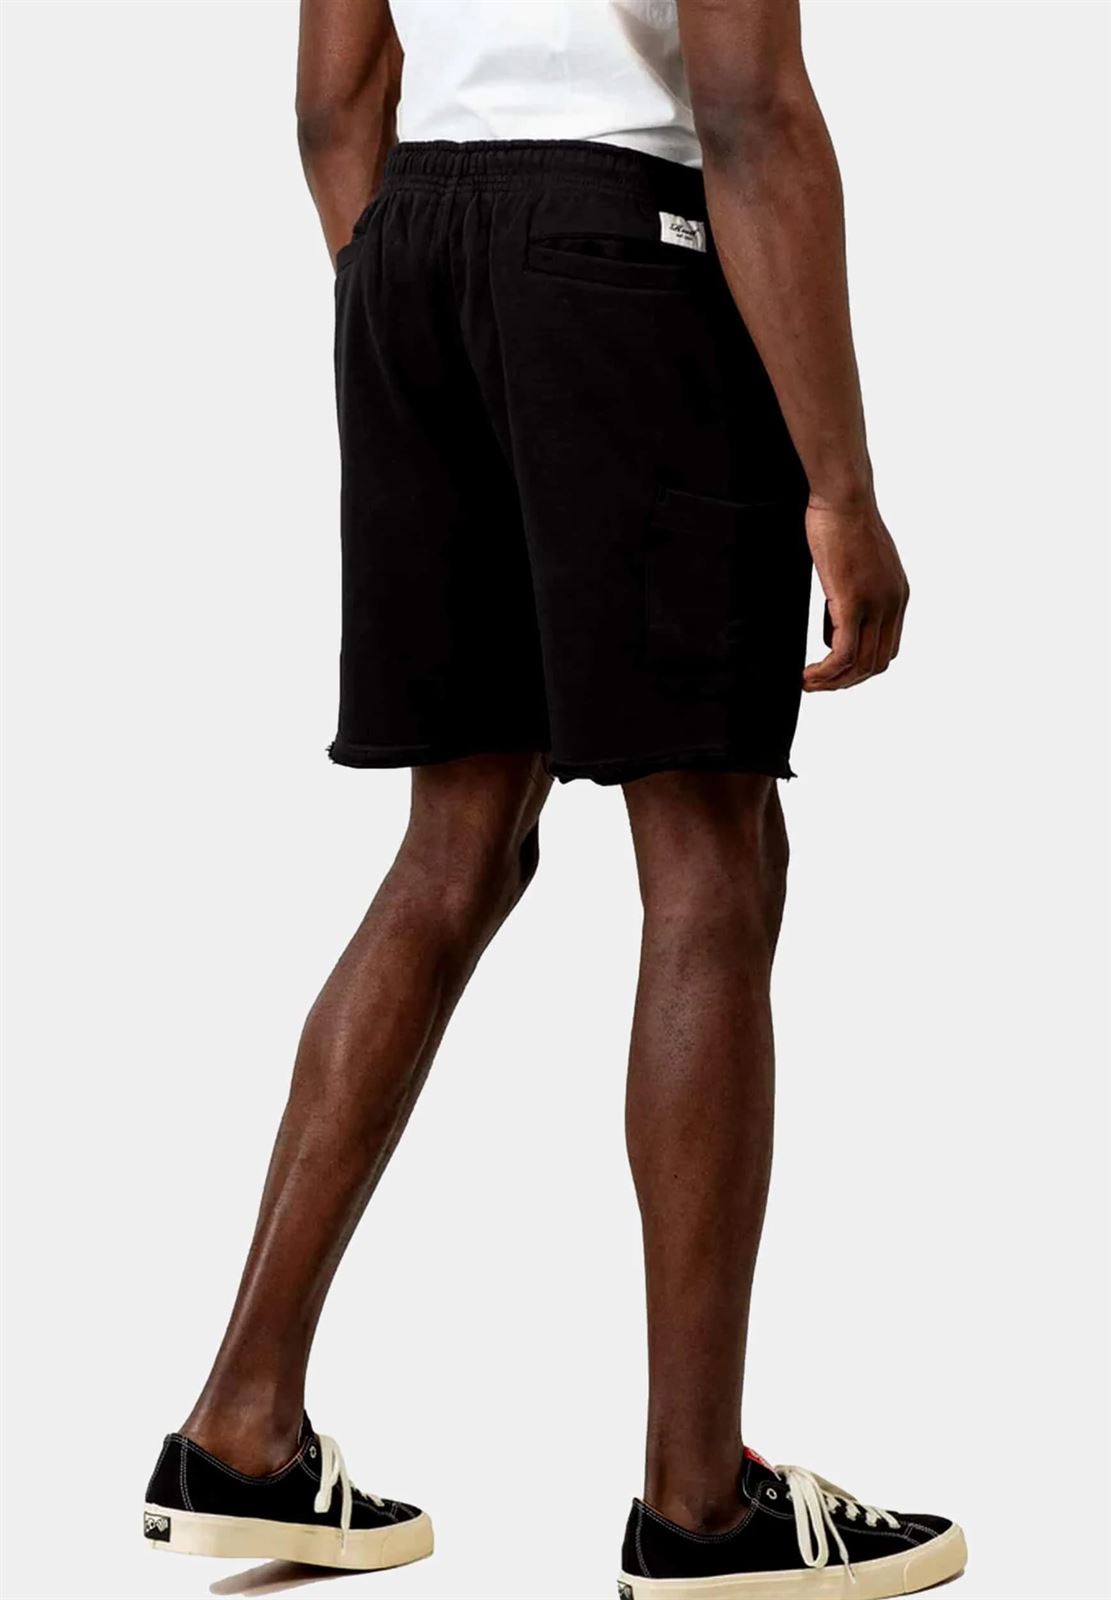 Pantalon corto REELL REFLEX LAZY SHORT black - Imagen 2